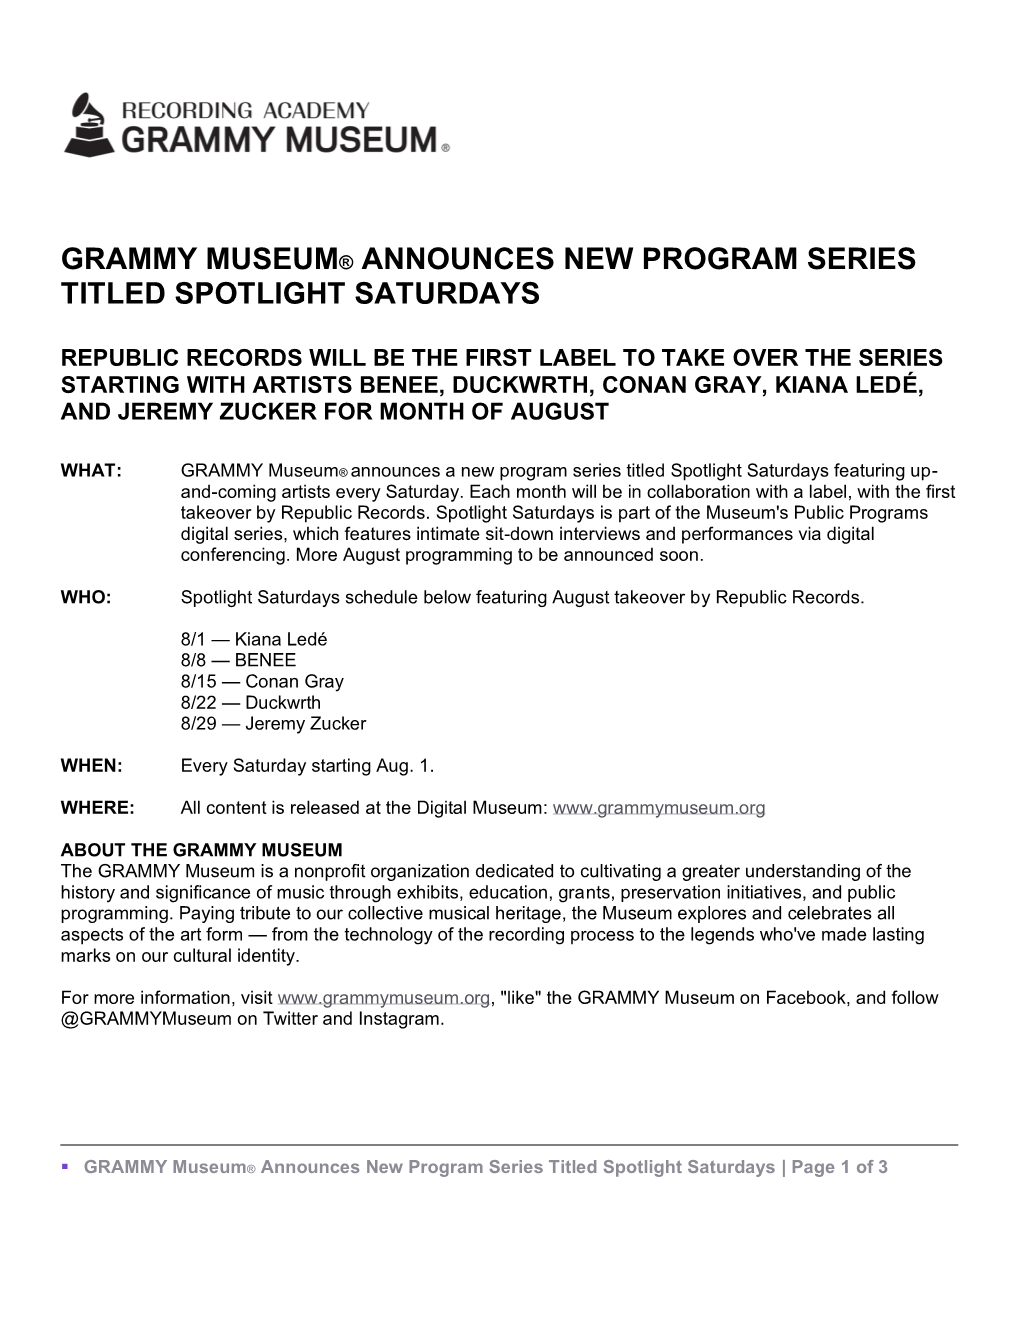 Grammy Museum® Announces New Program Series Titled Spotlight Saturdays